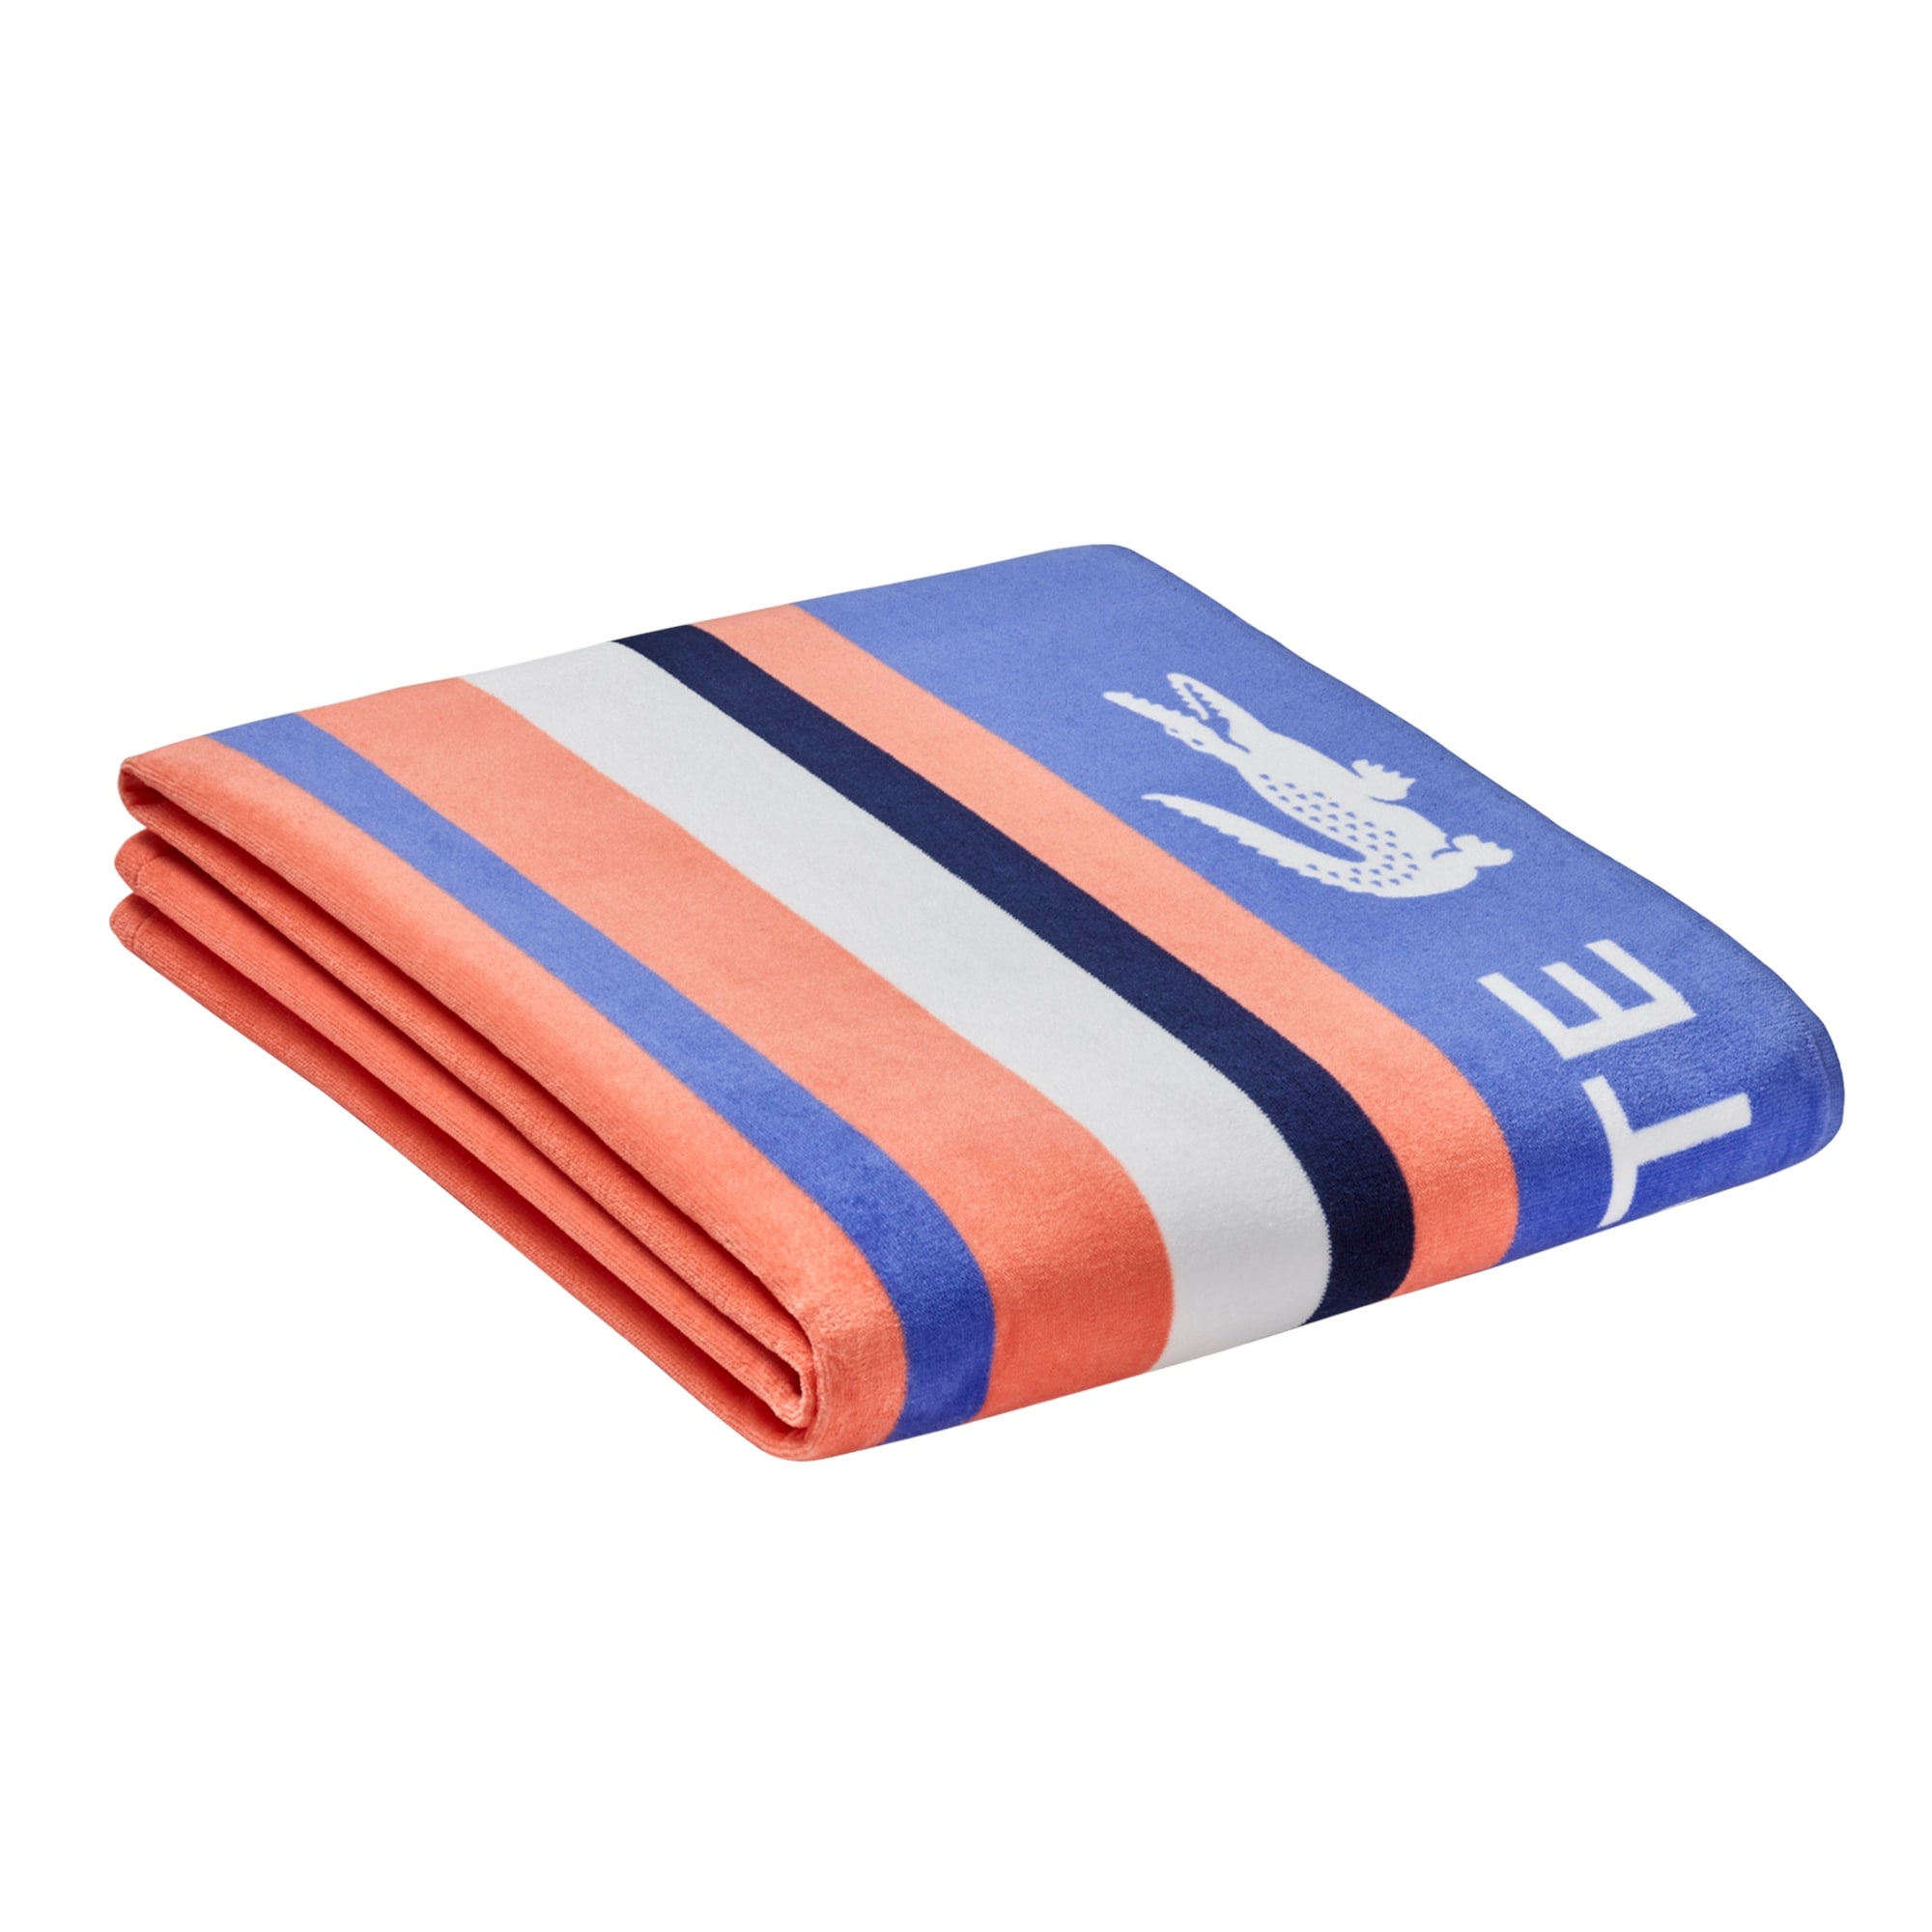 Lacoste Sunscreen Stripe Towel in - Bed Bath & Beyond - 38424018